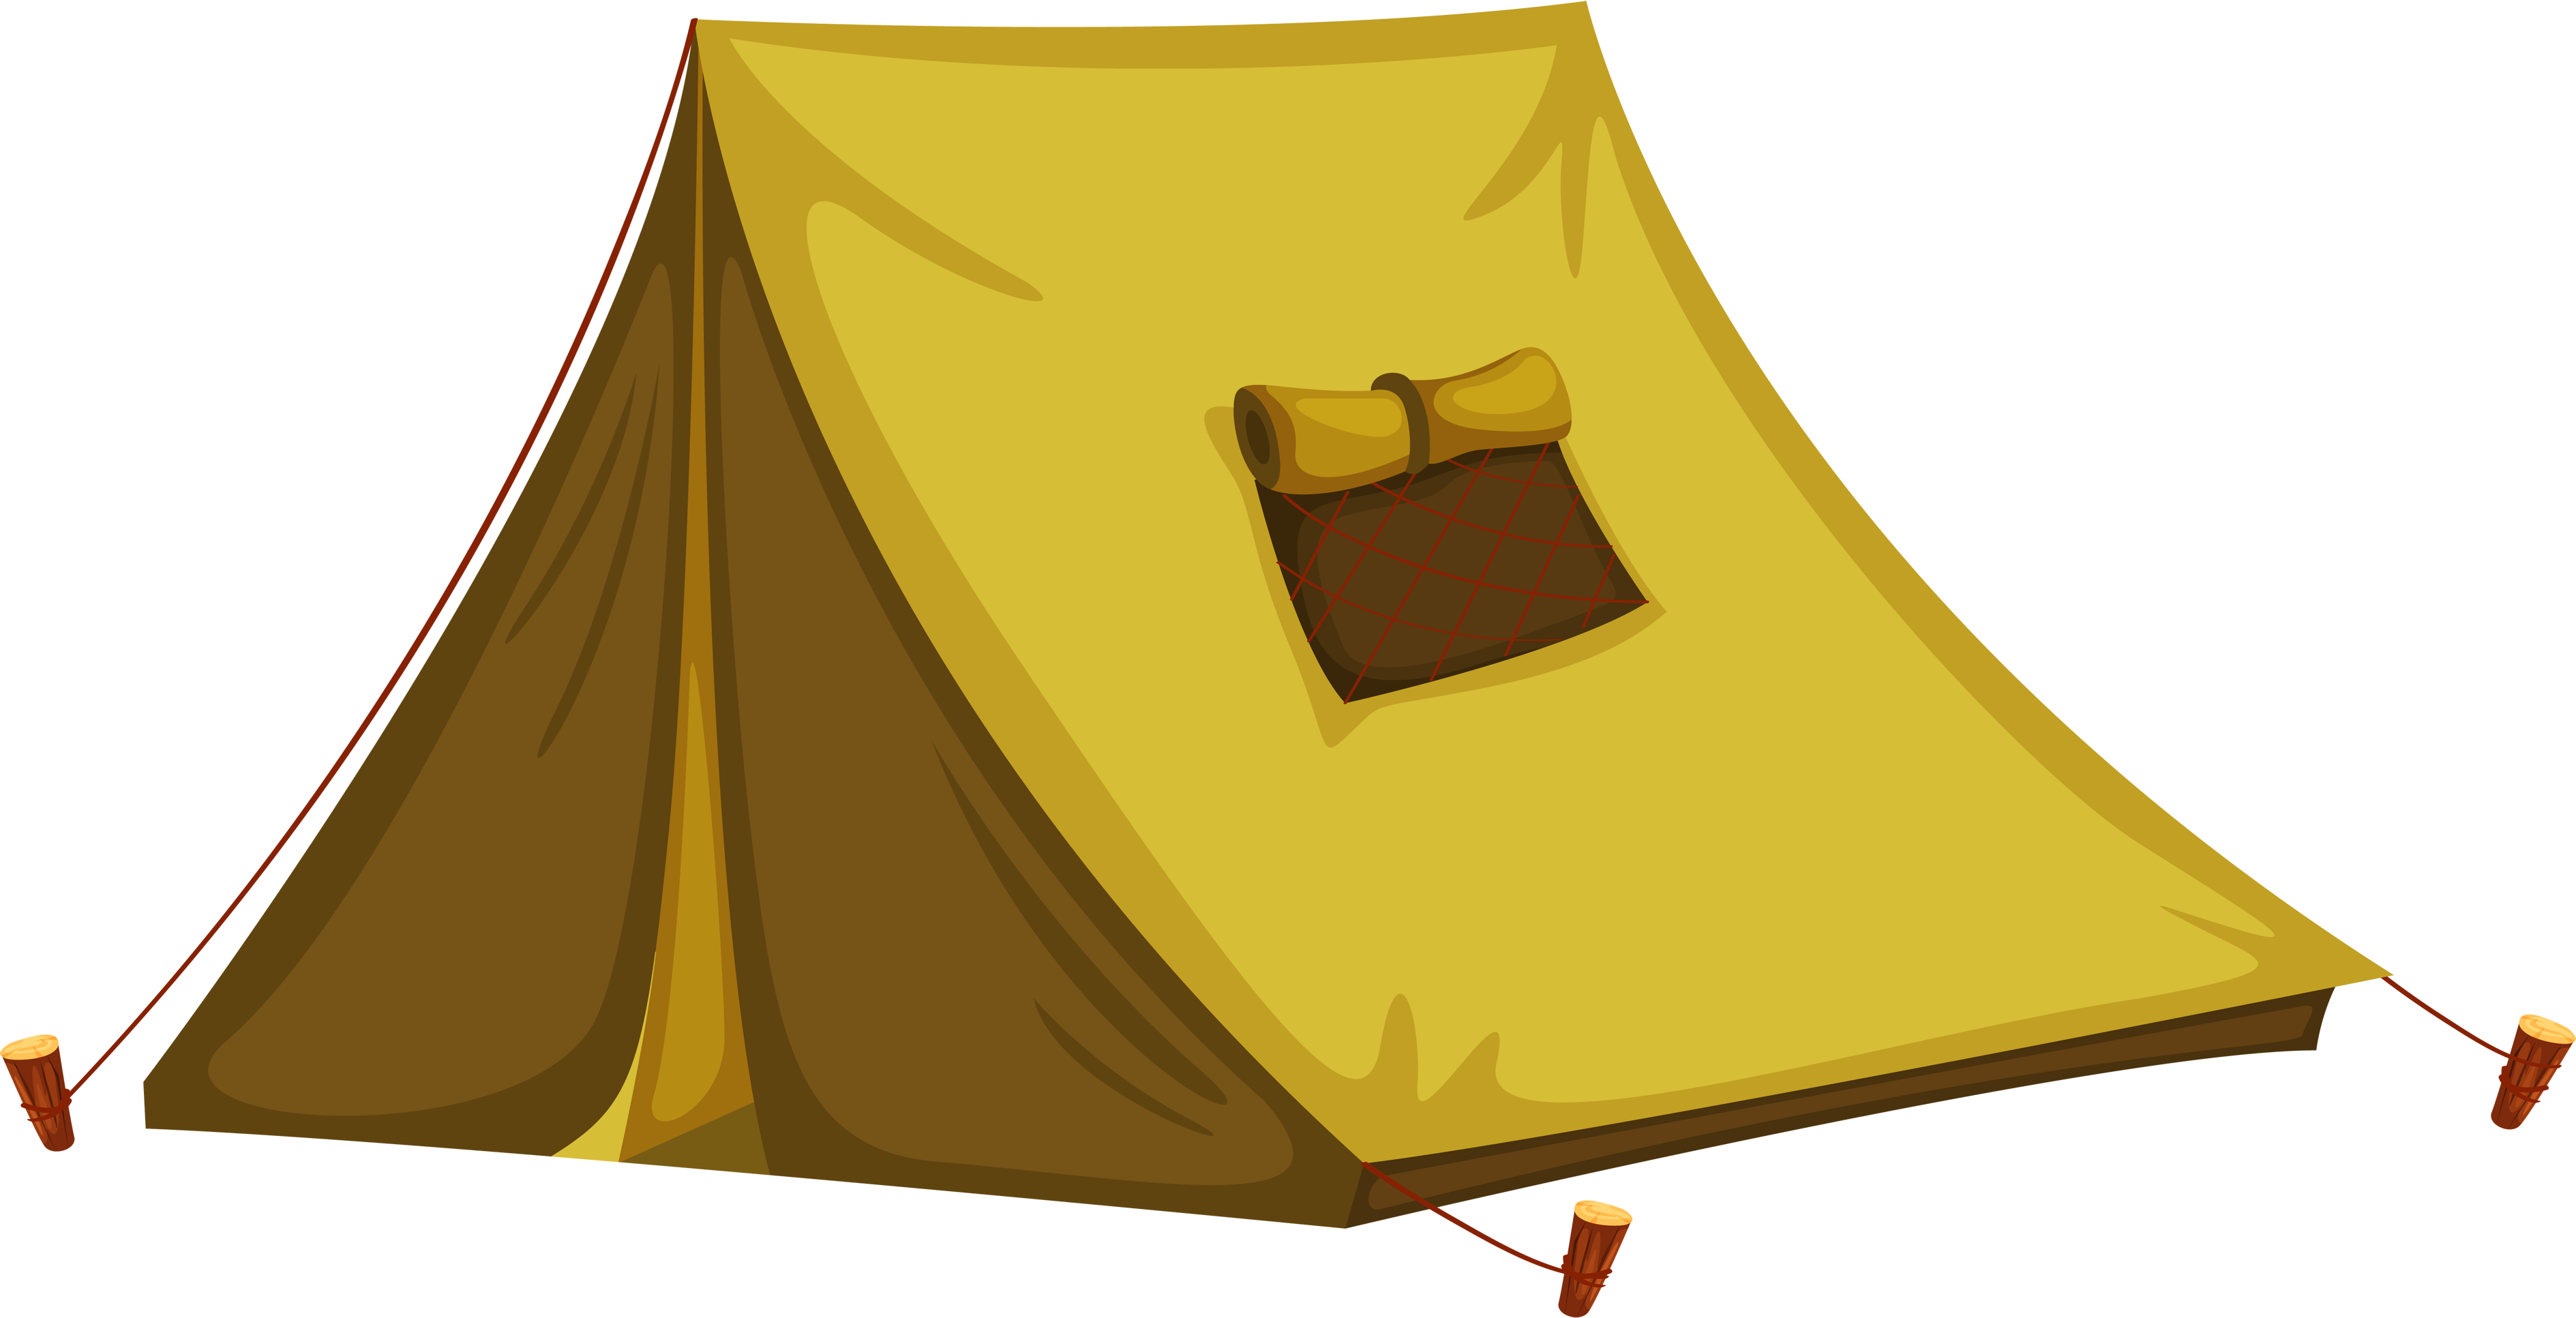 Yellow Tent